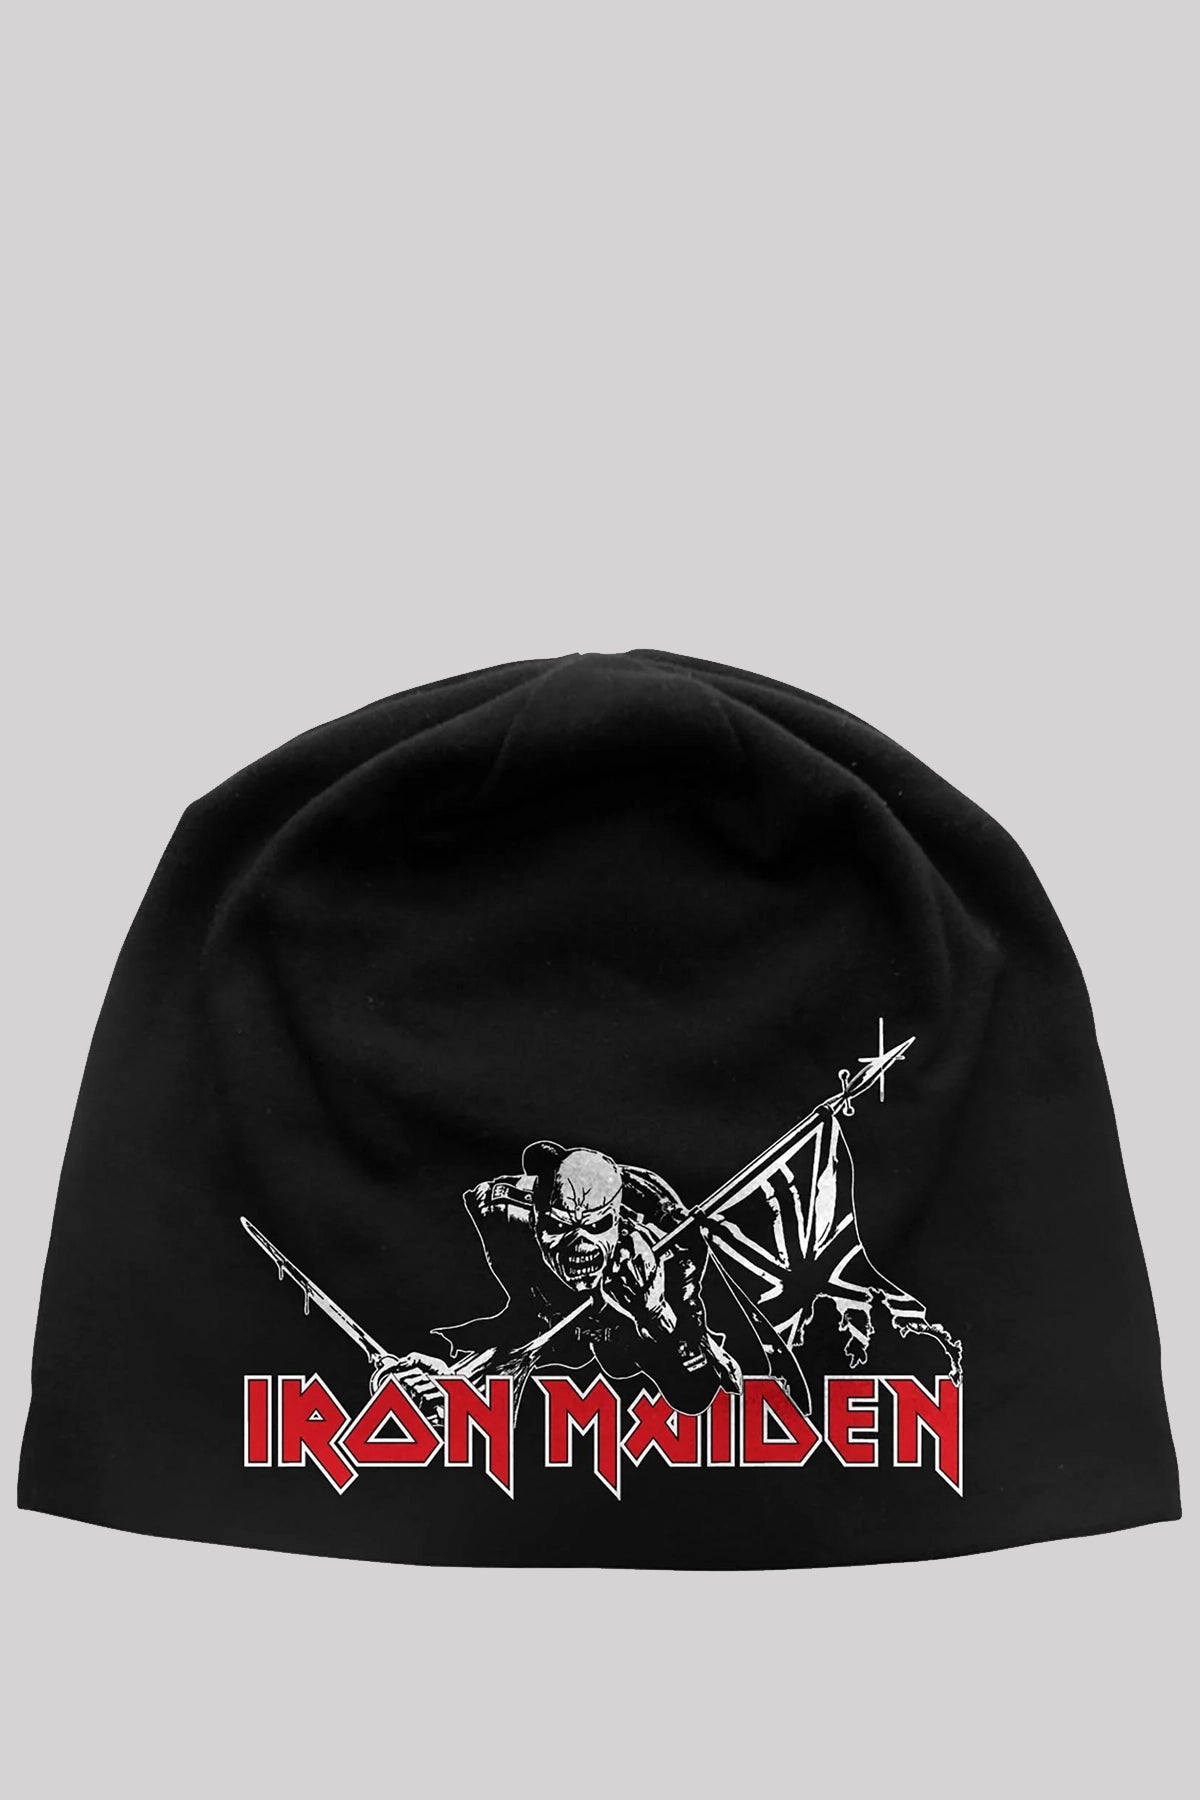 Iron Maiden Unisex Beanie Hat: The Trooper Official Merch